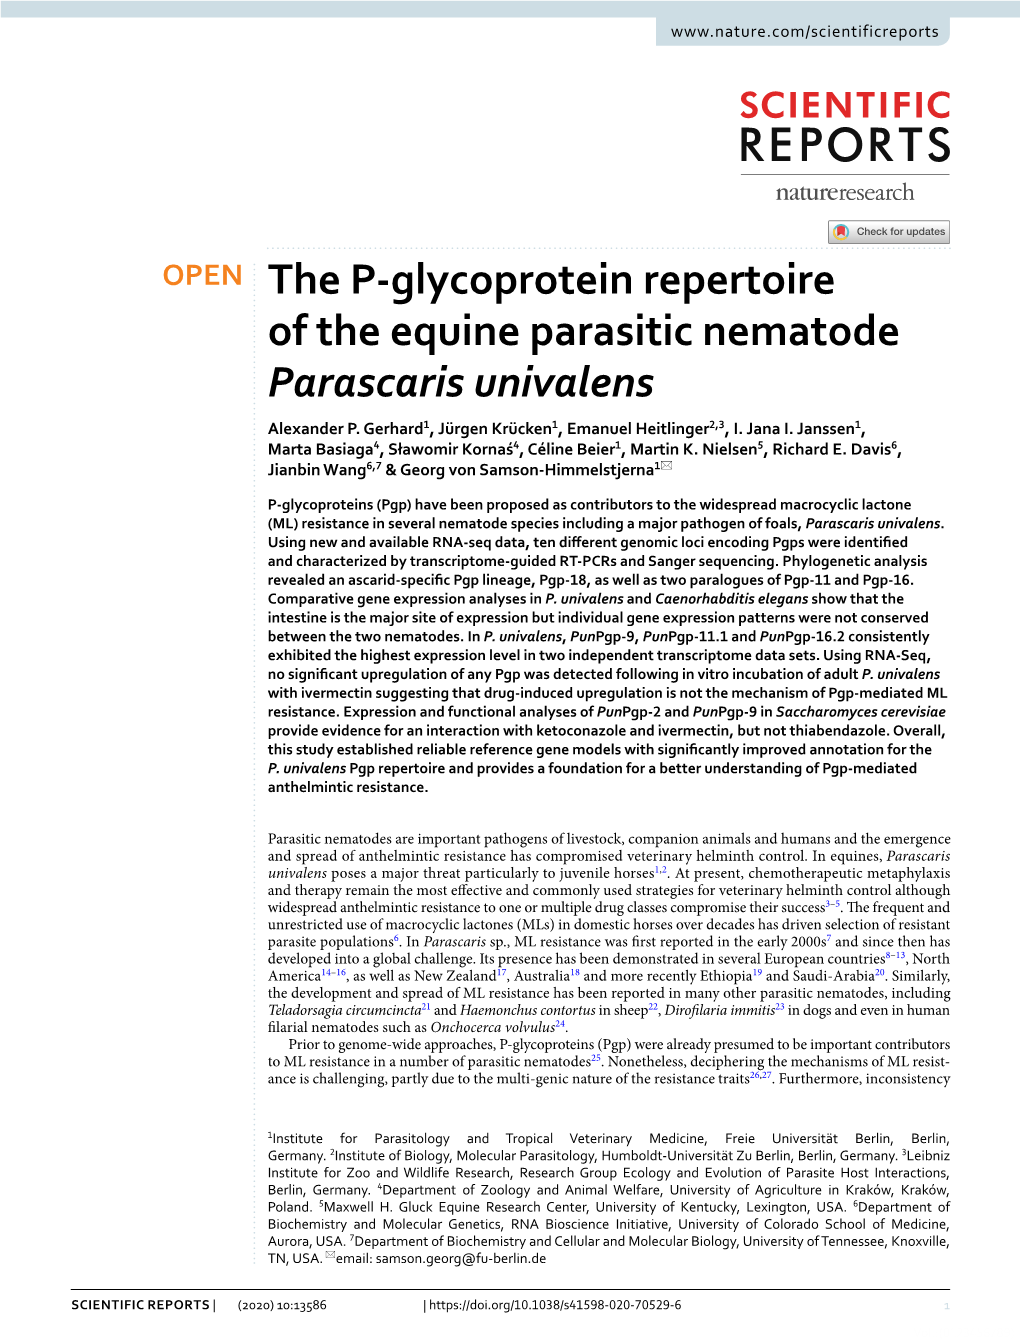 The P-Glycoprotein Repertoire of the Equine Parasitic Nematode Parascaris Univalens